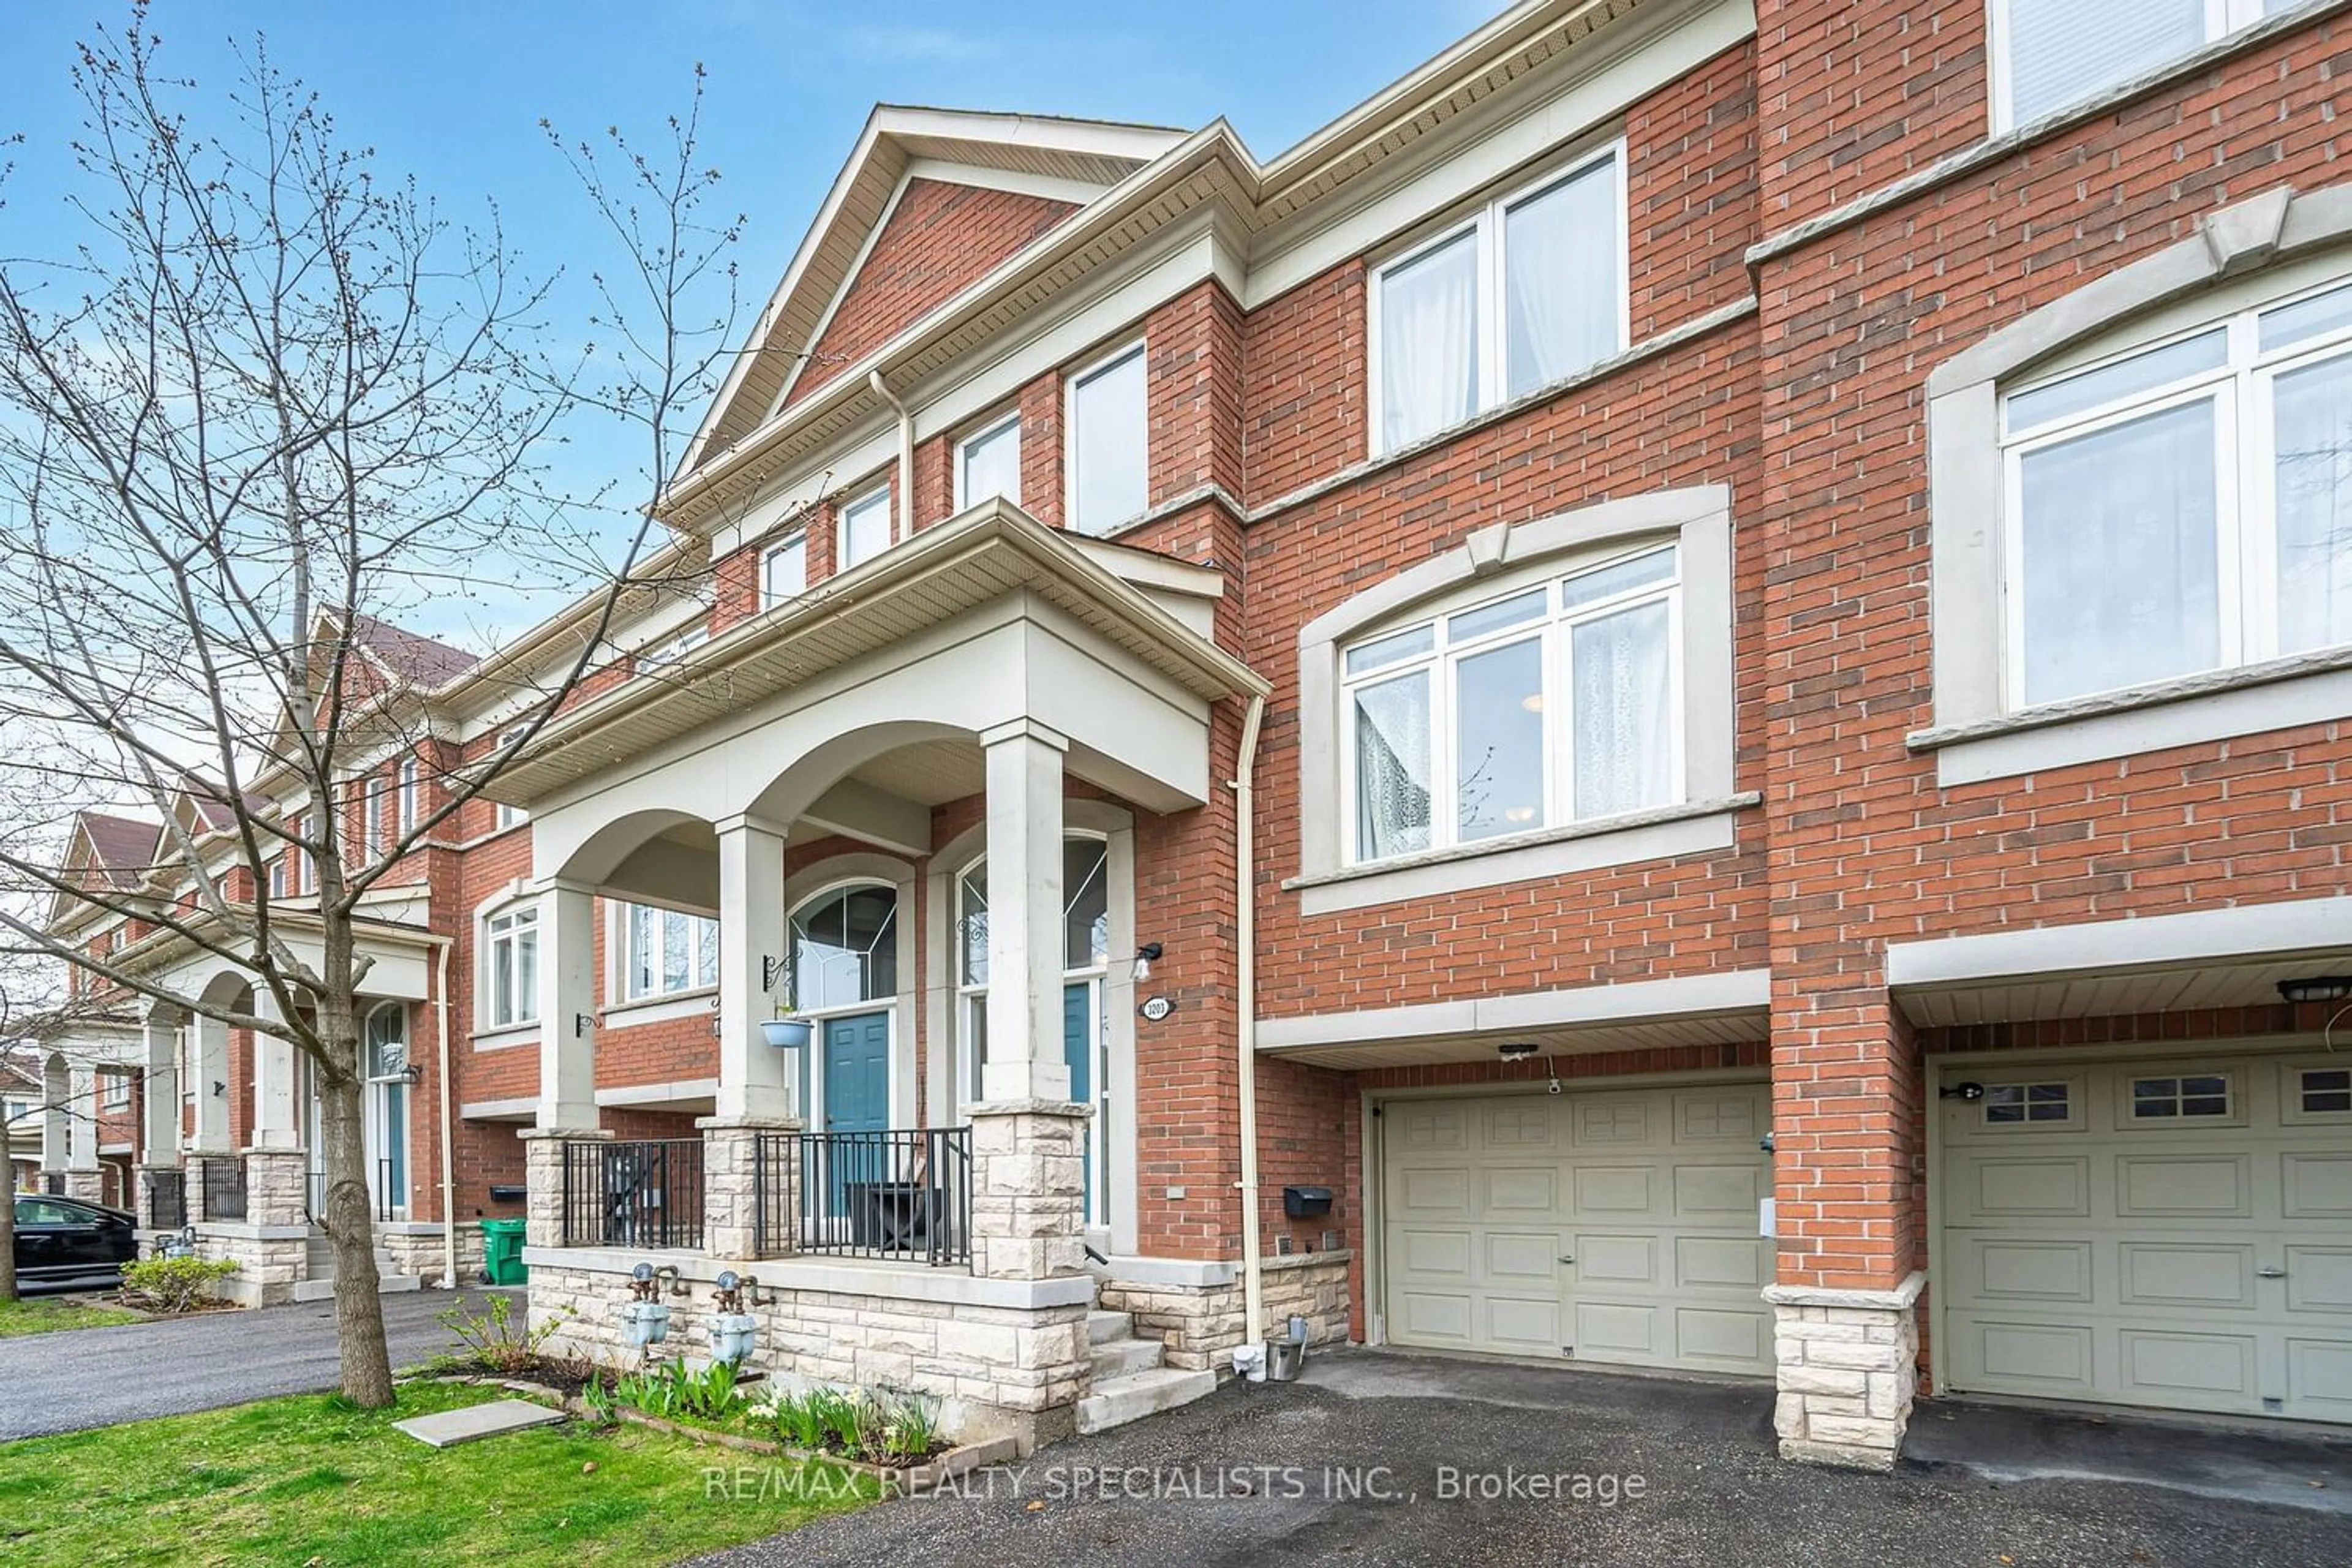 Home with brick exterior material for 3203 Joel Kerbel Pl, Mississauga Ontario L4Y 0B1